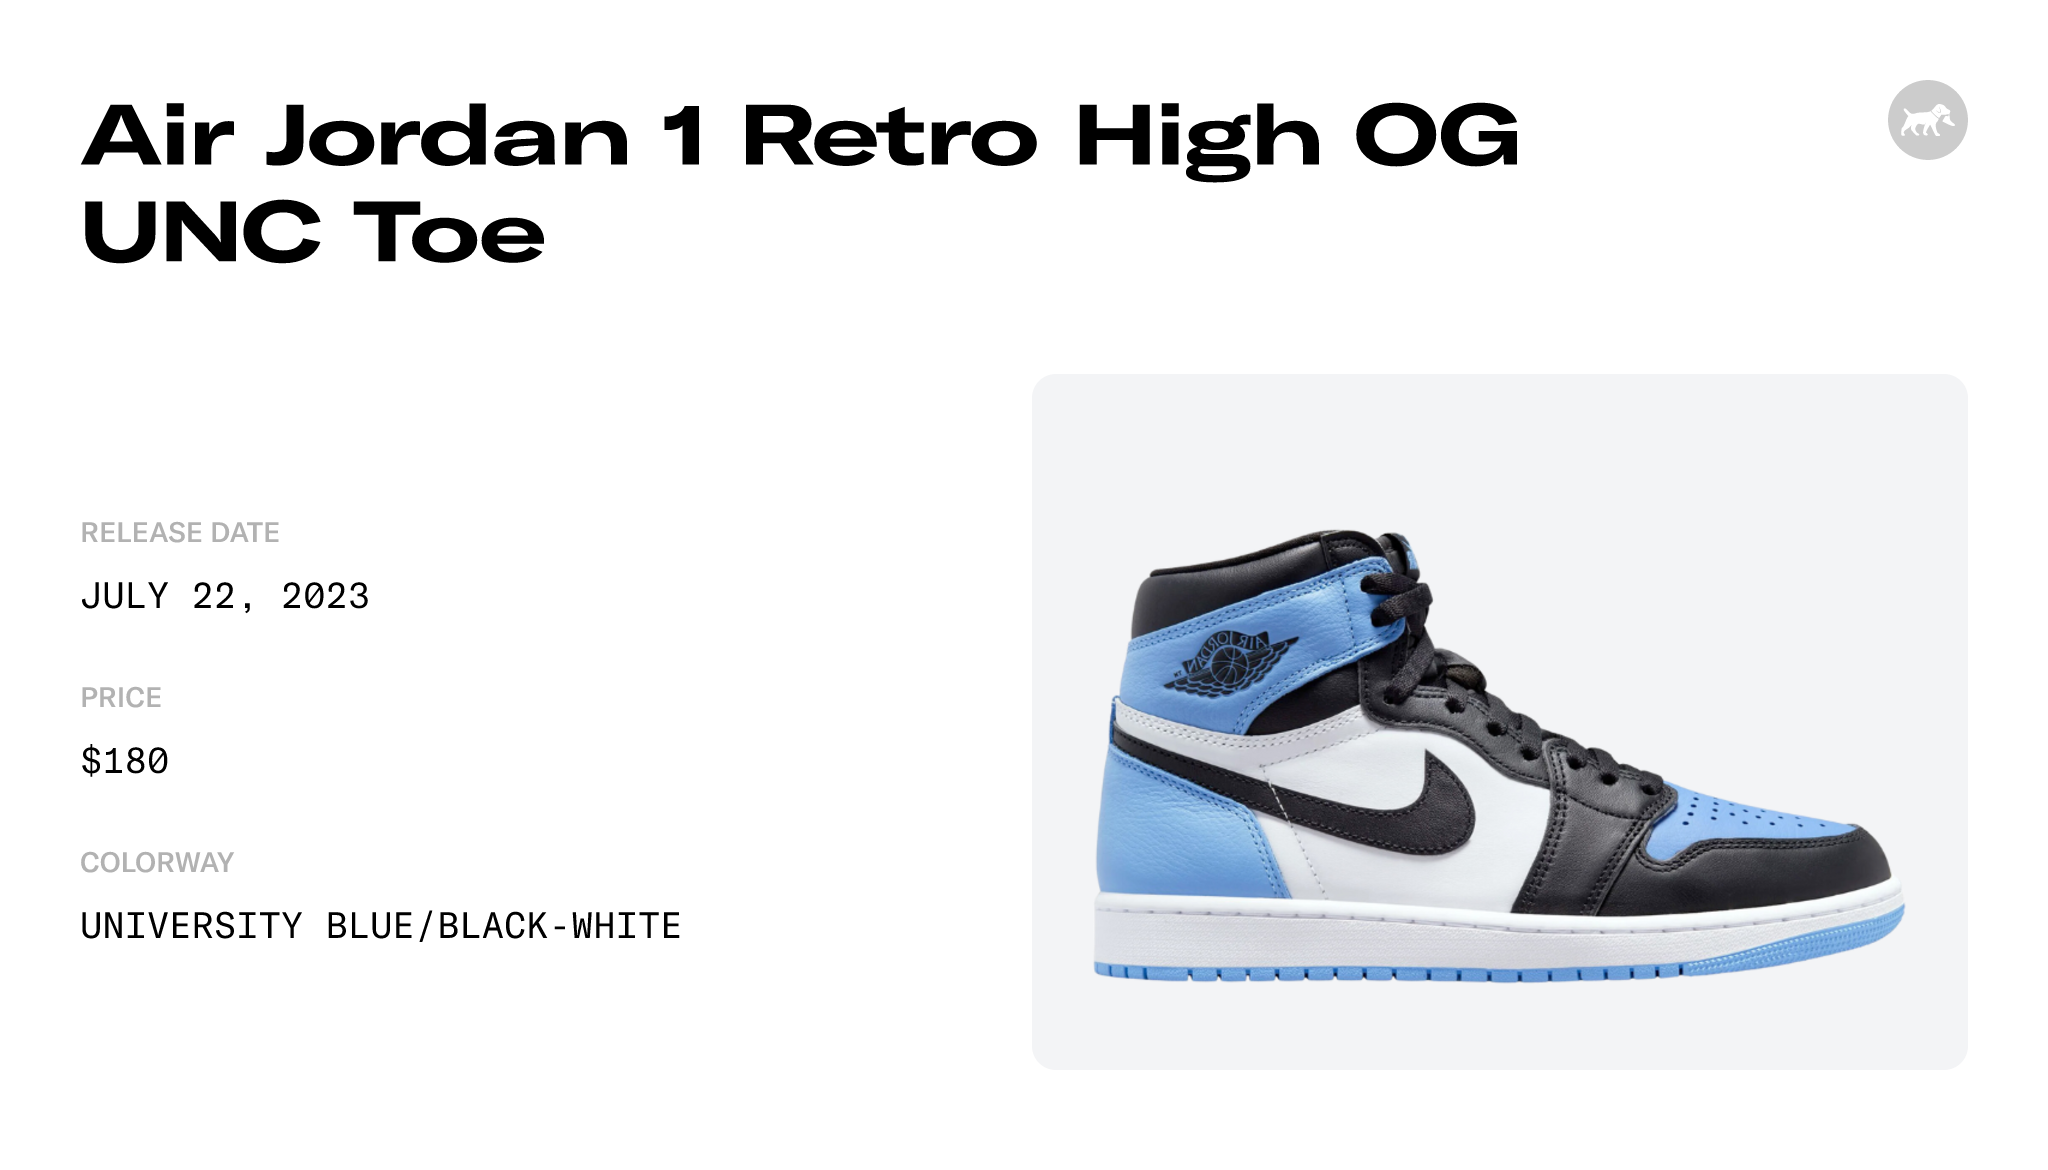 Air Jordan 1 Retro High OG UNC Toe Release Date